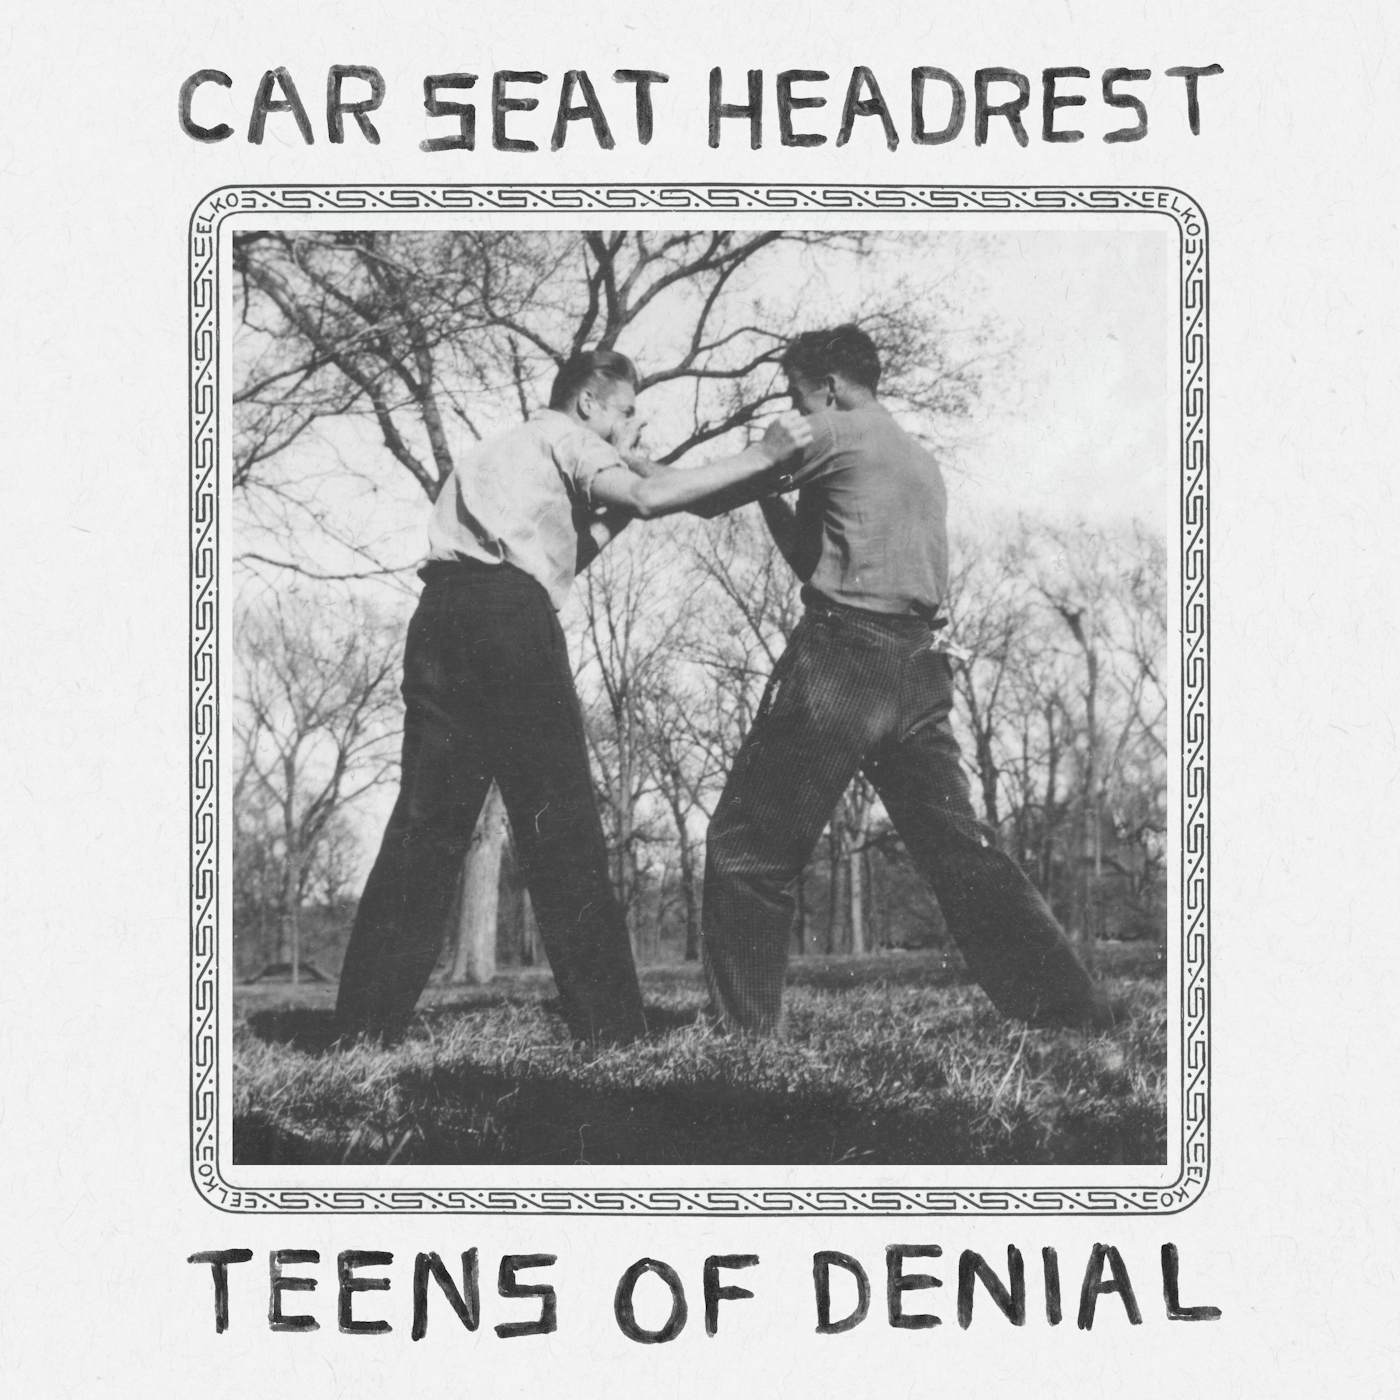 Car Seat Headrest TEENS OF DENIAL Vinyl Record - Digital Download Included